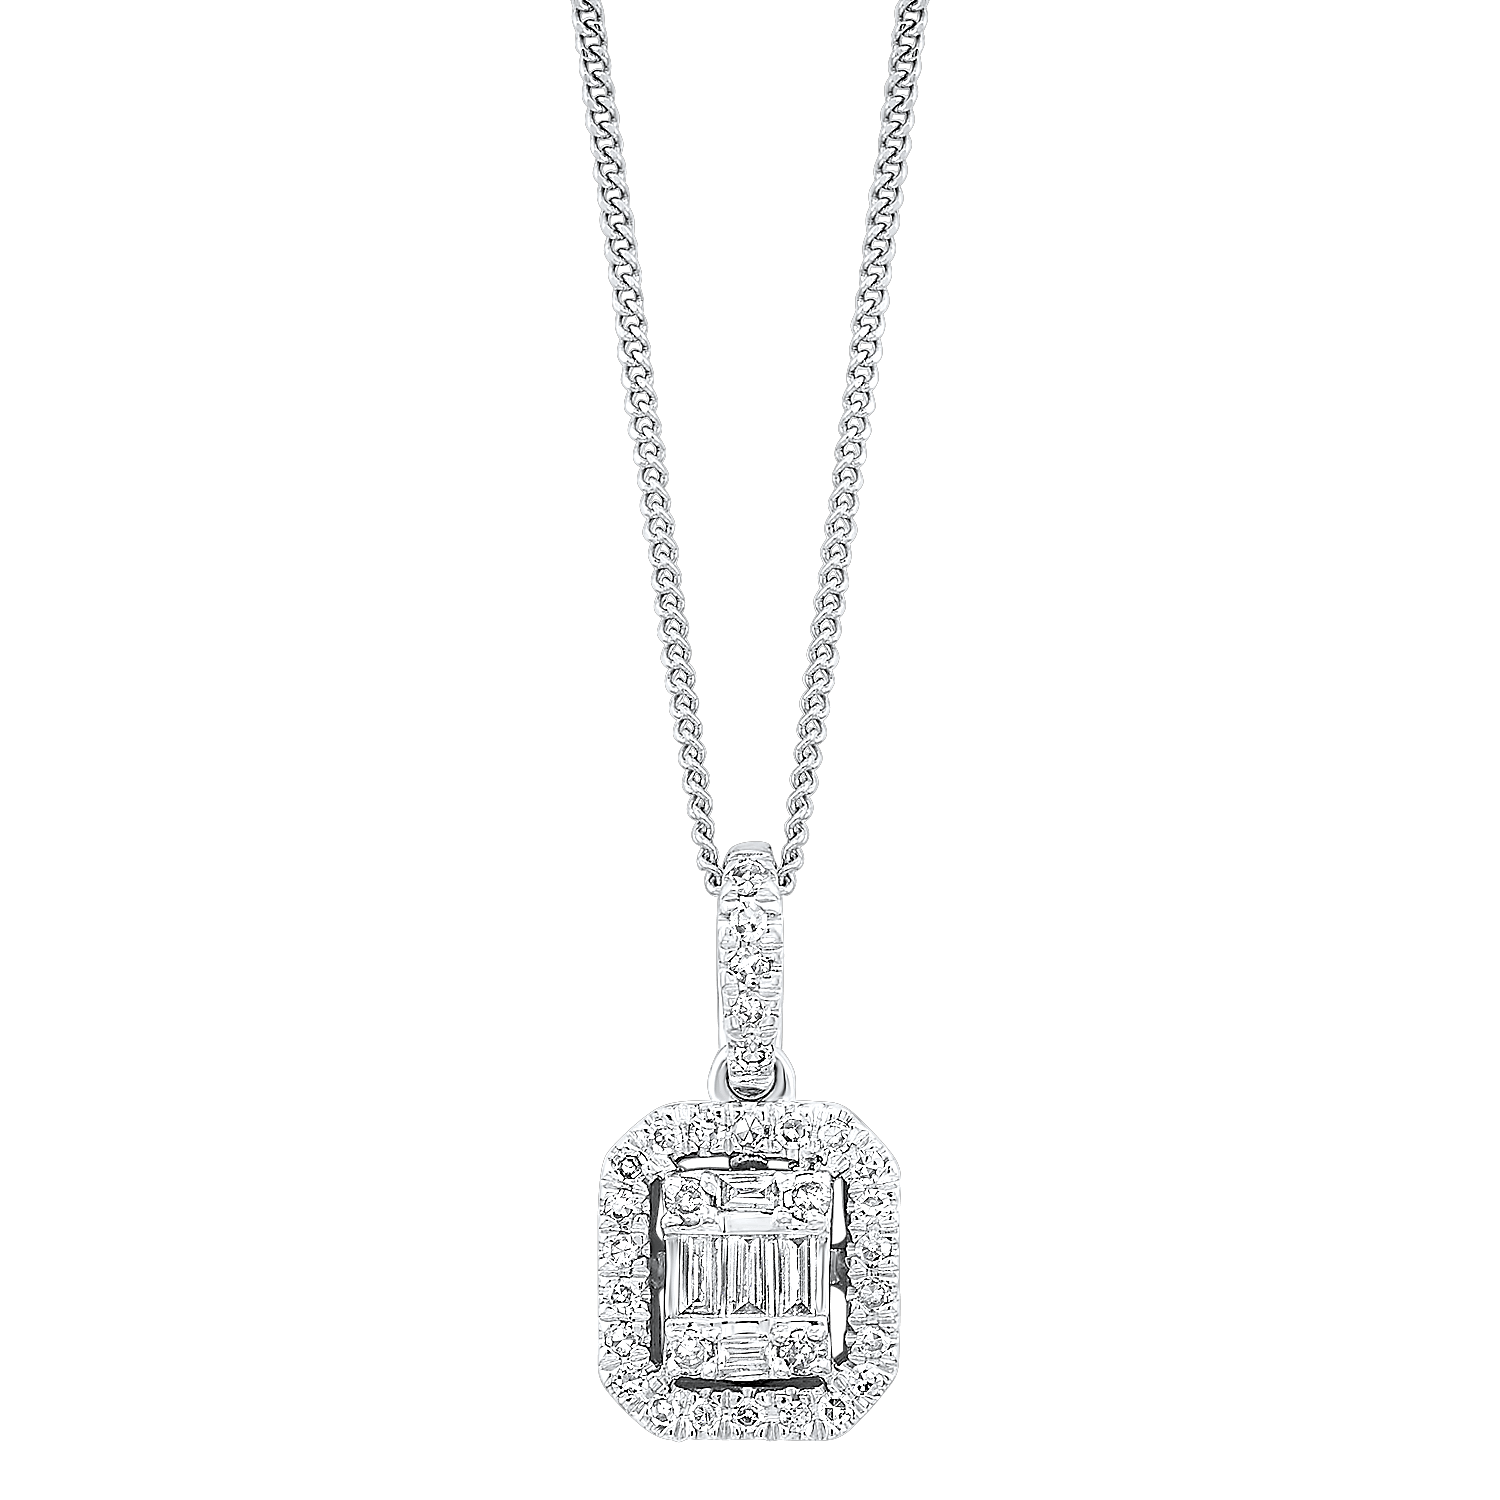 BW James Jewelers Pendant 16 Page Christmas Catalog Offer 14K Diamond Pendant 1/7ctw